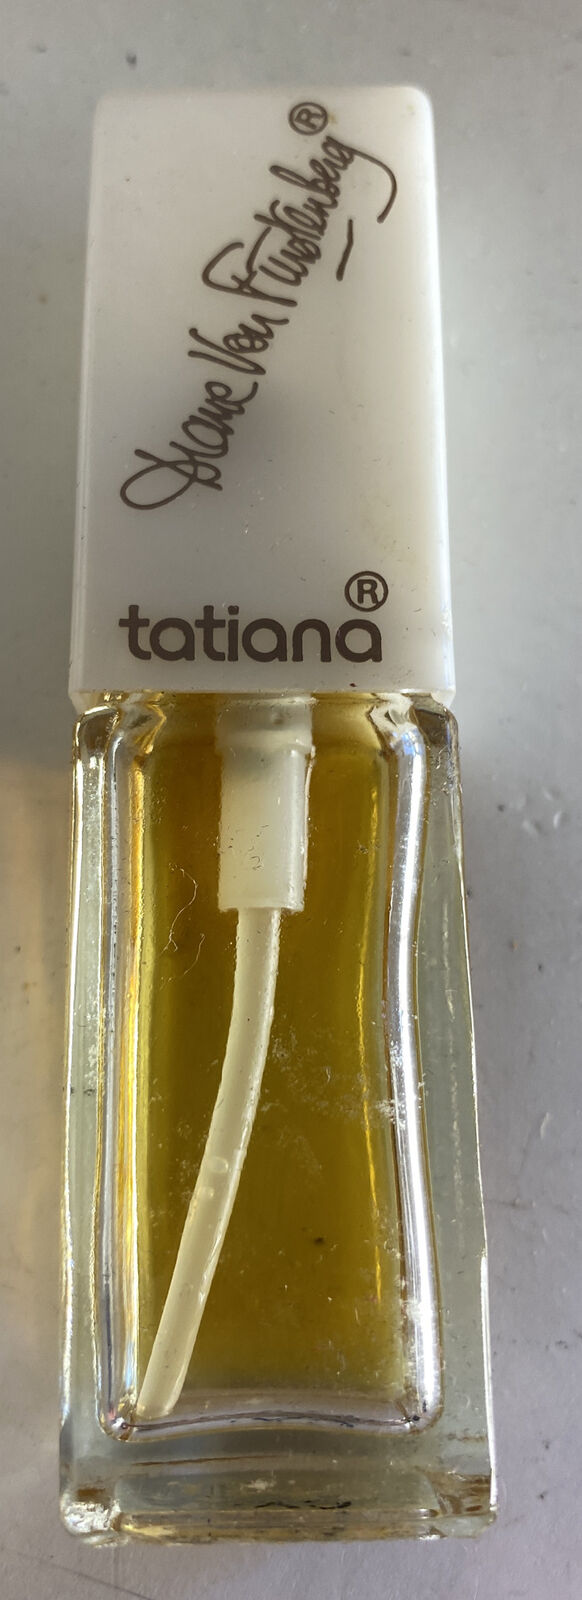 Vintage Tatiana Diane Von Furstenberg 1.5 oz Cologne Spray See Description